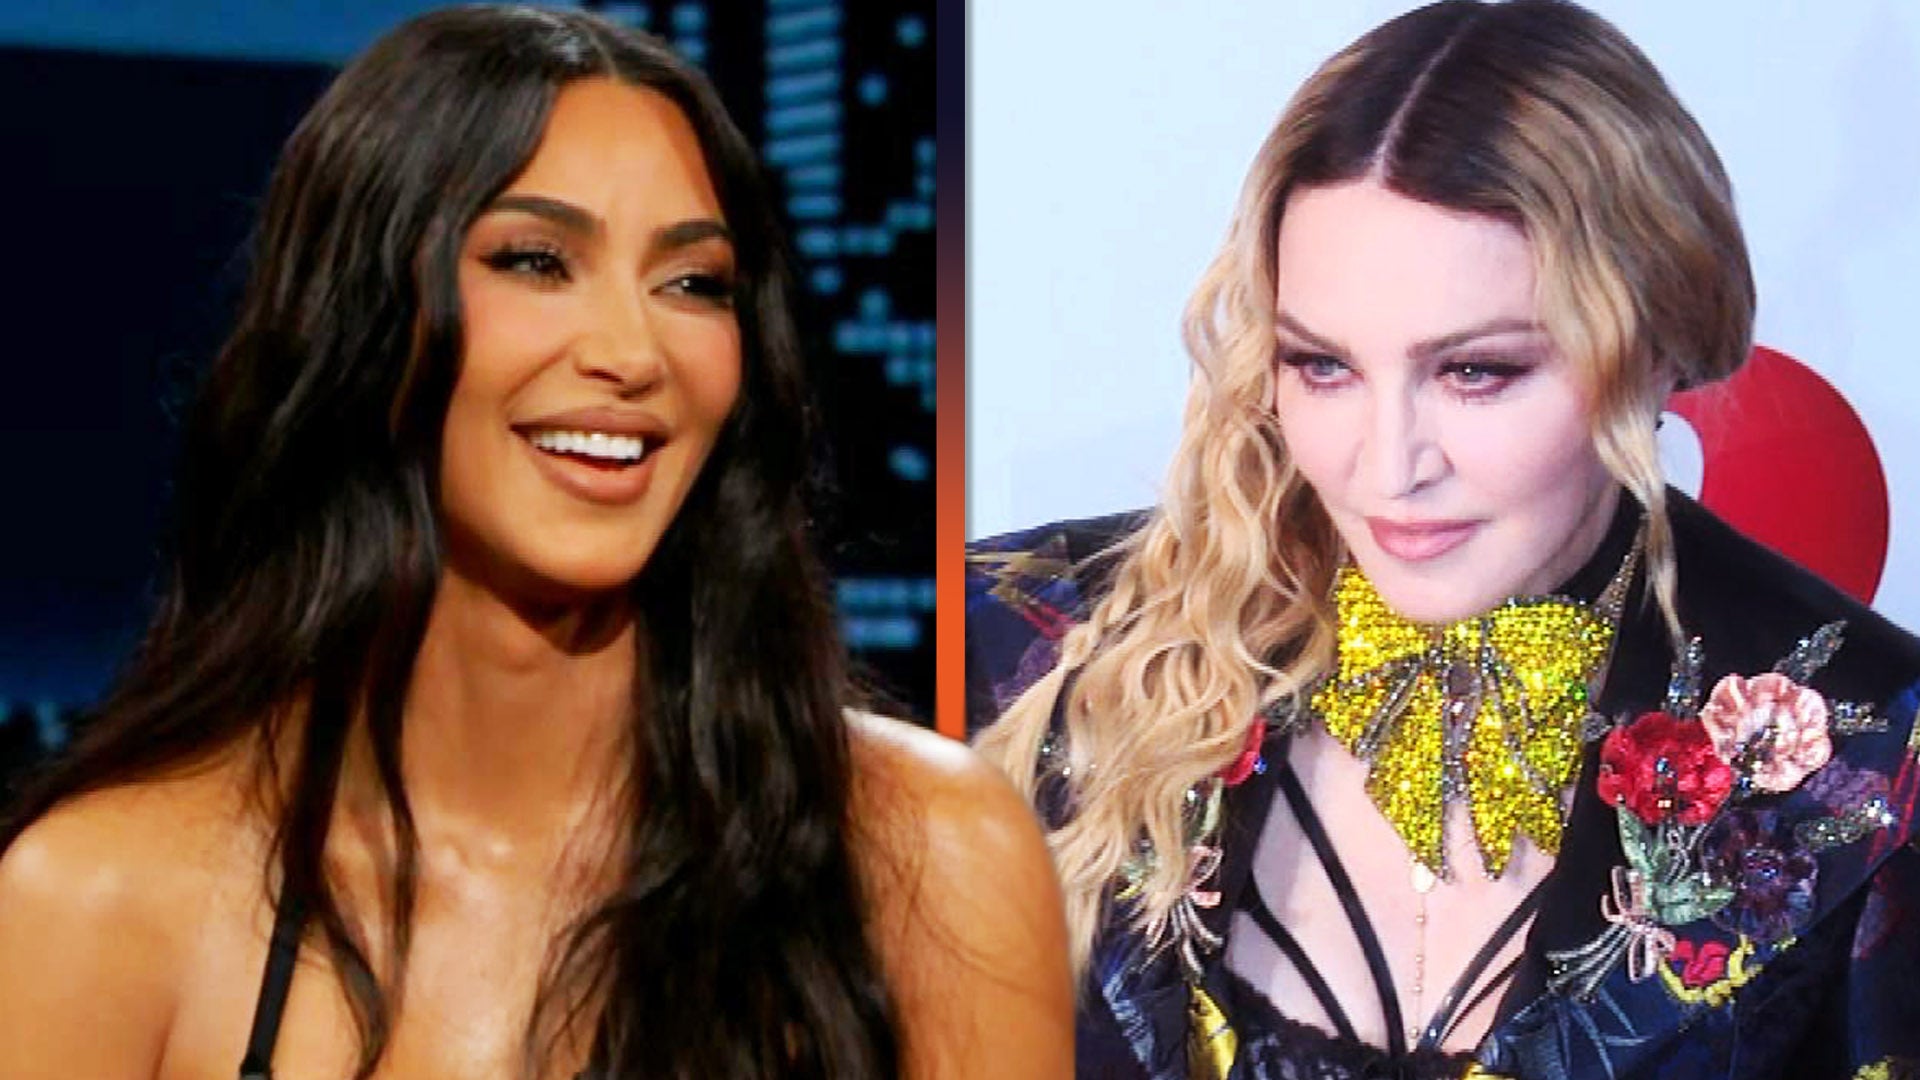 Kim Kardashian Reveals She Used to Walk Madonna’s Dogs in Exchange for Her Jewelry